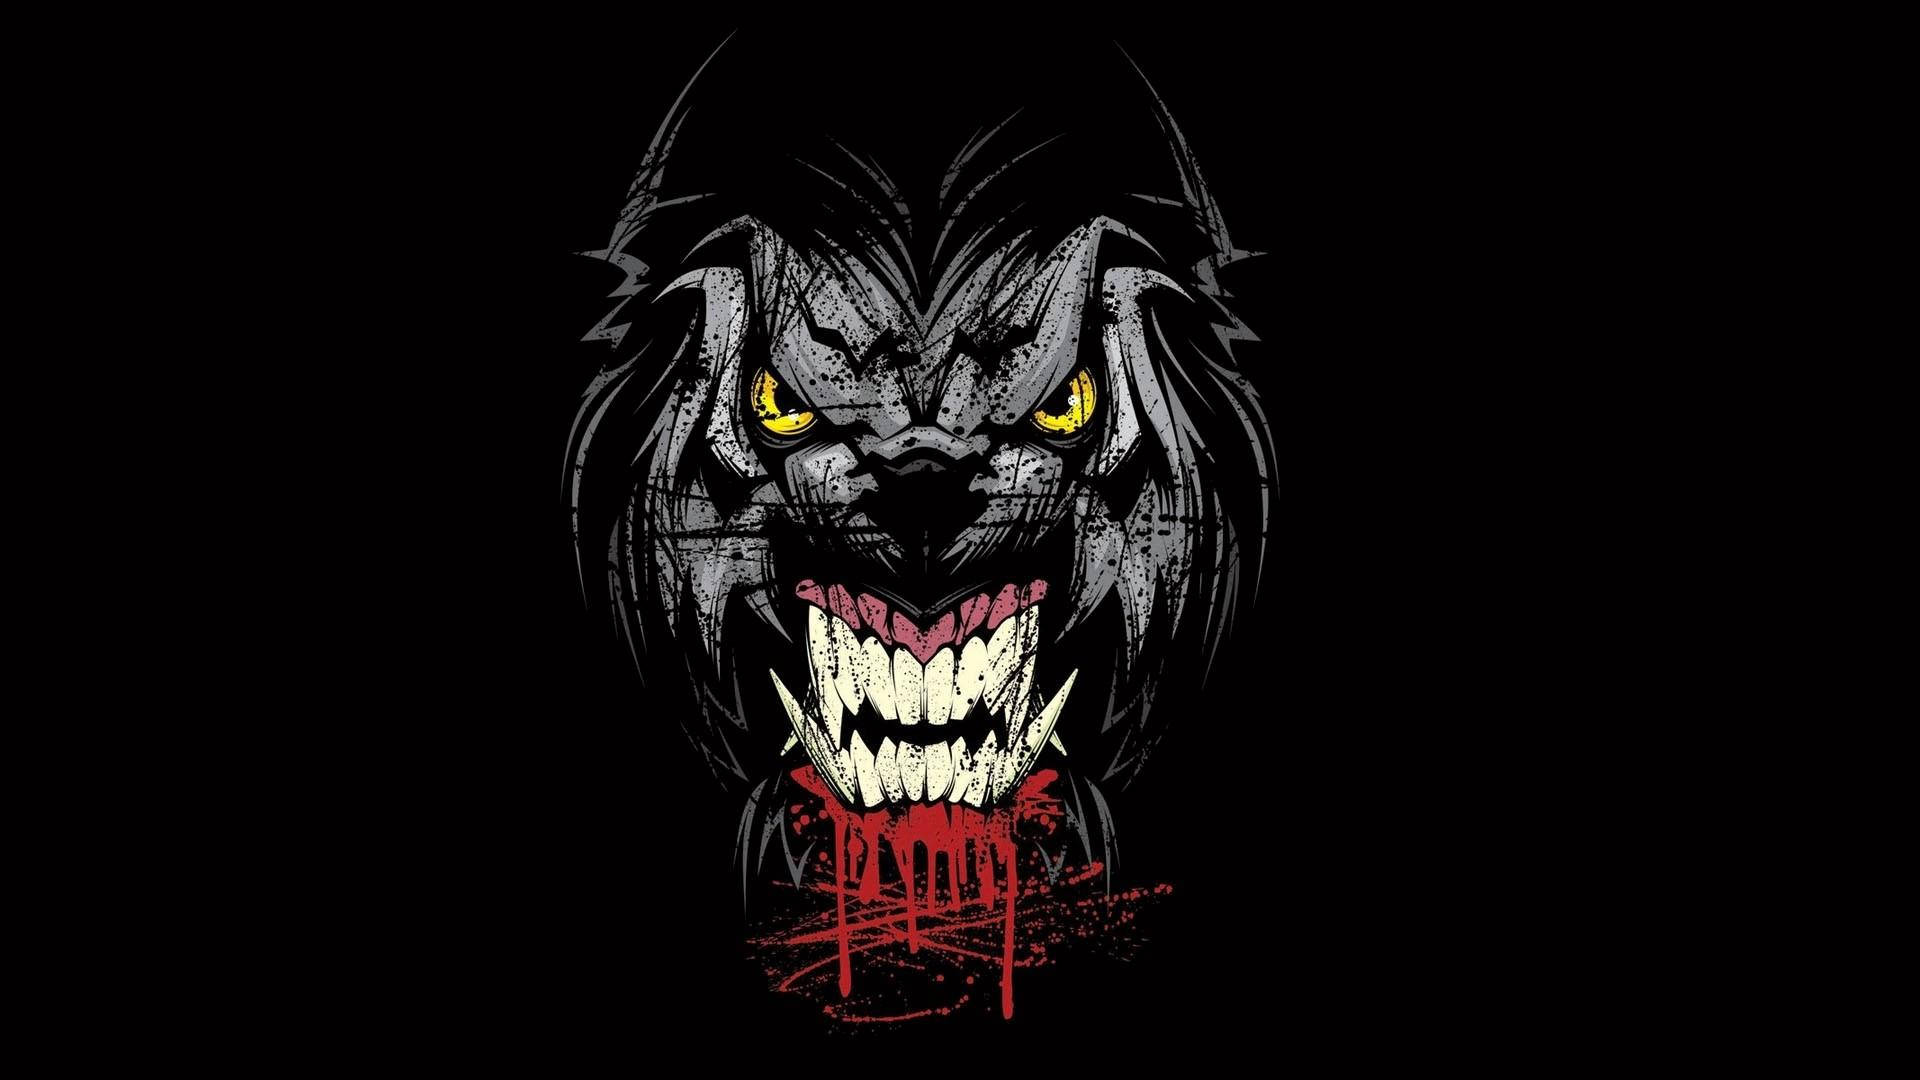 Dark and mysterious werewolf artwork Wallpaper